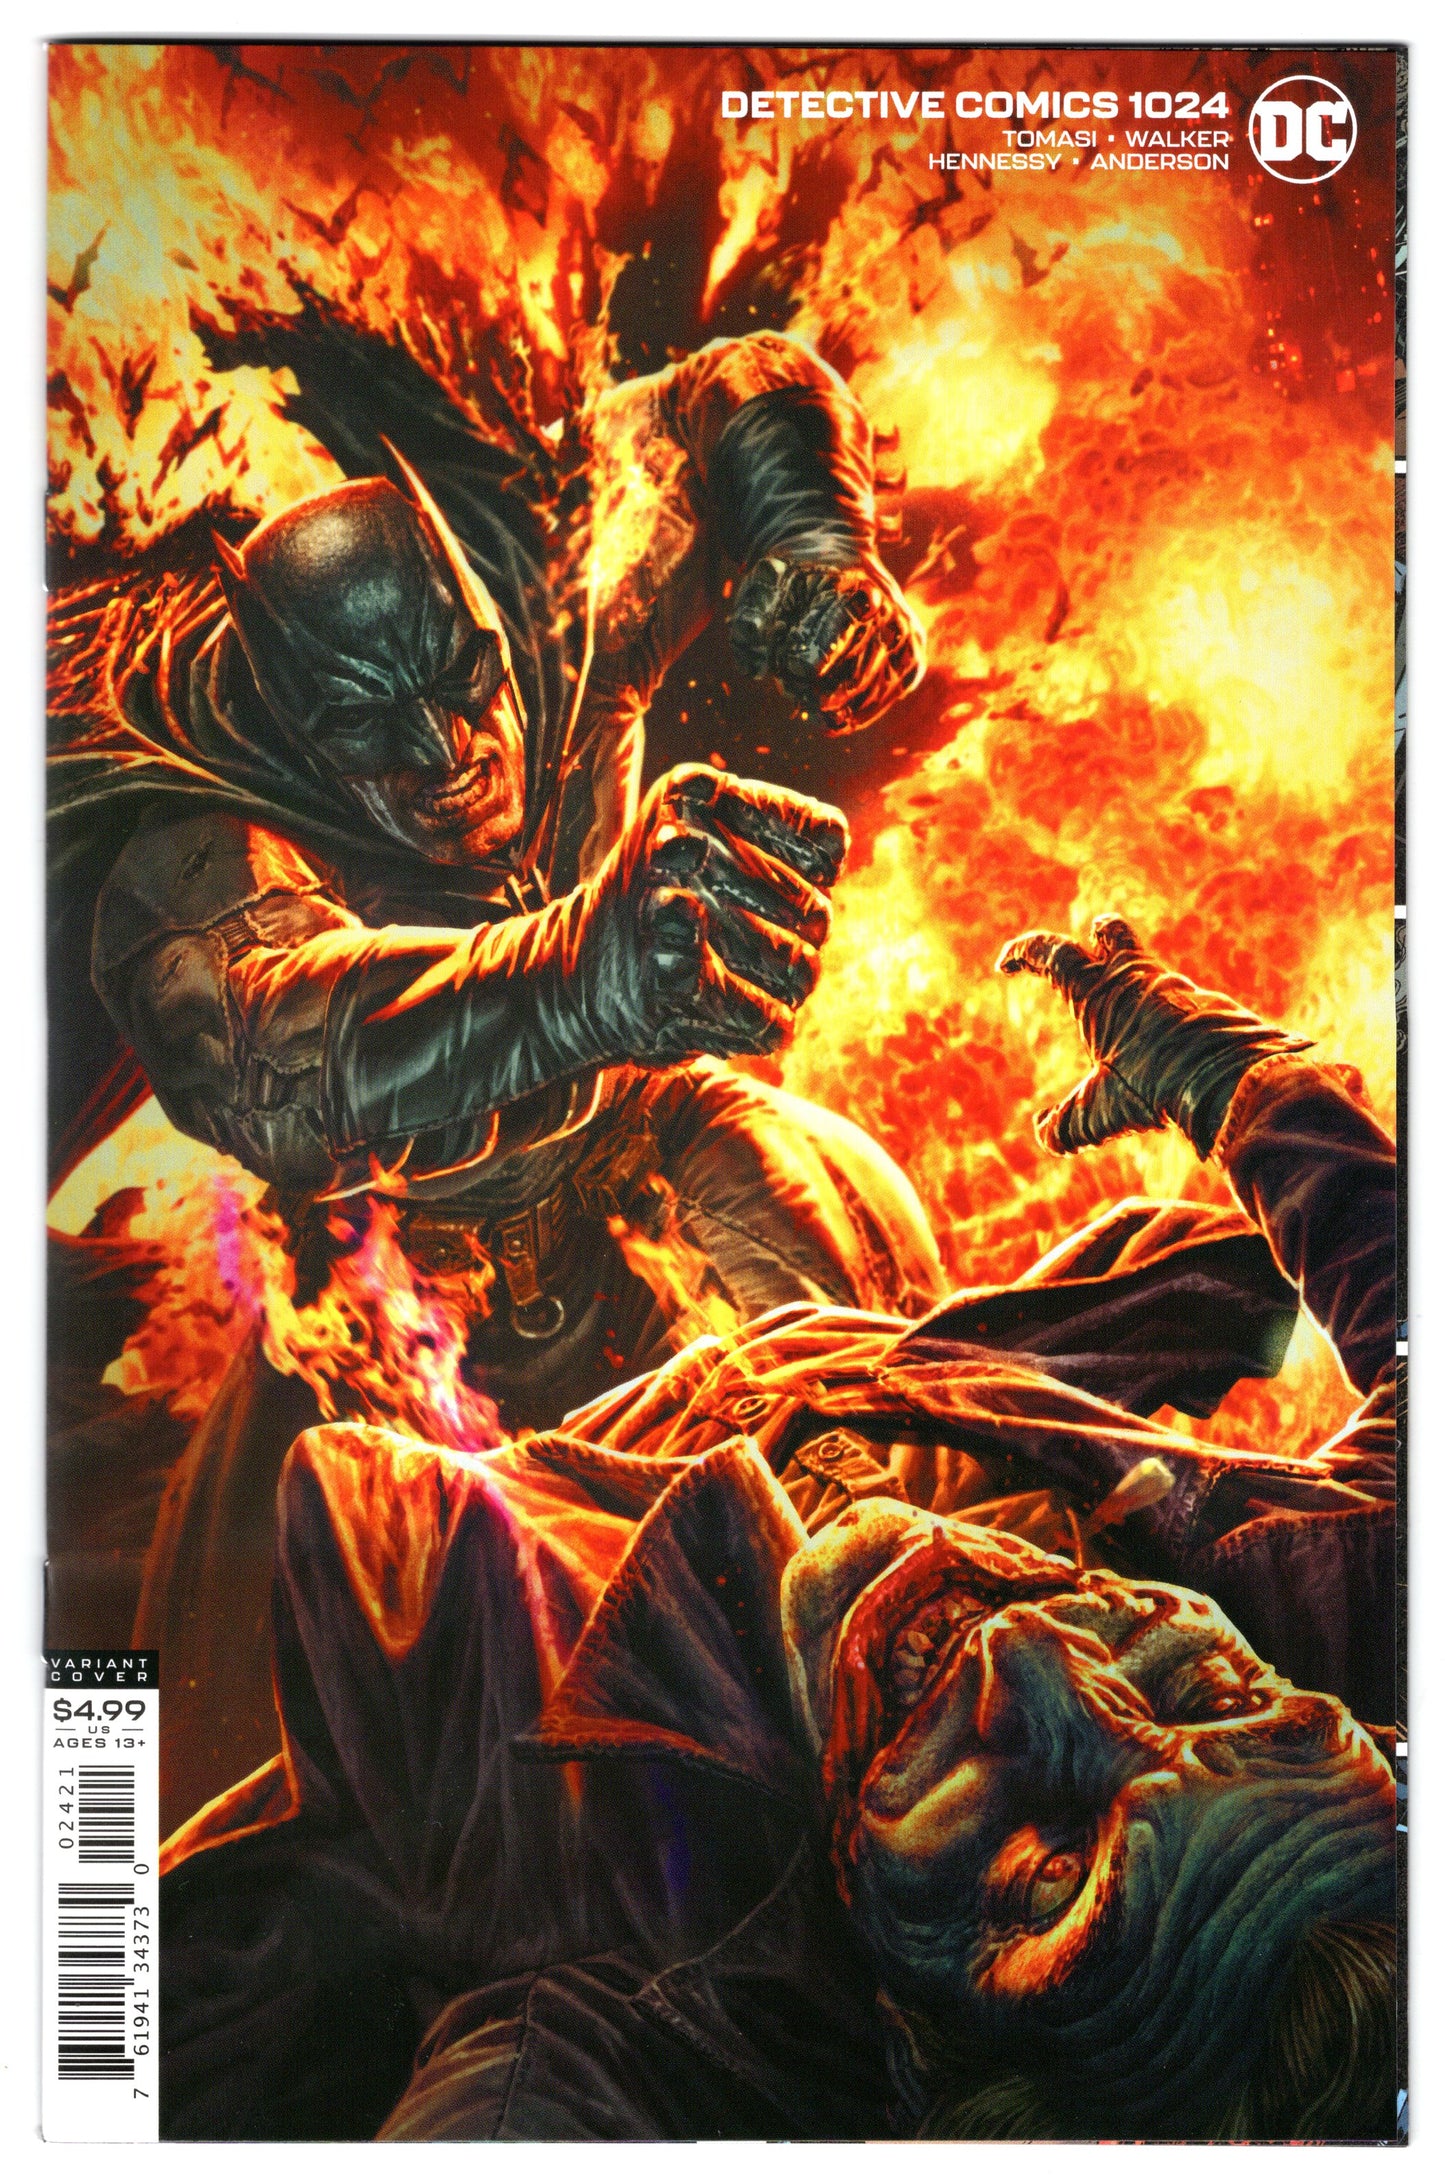 Detective Comics #1024 "Variant Cover" (Sept. 2020 - Marvel) NM+